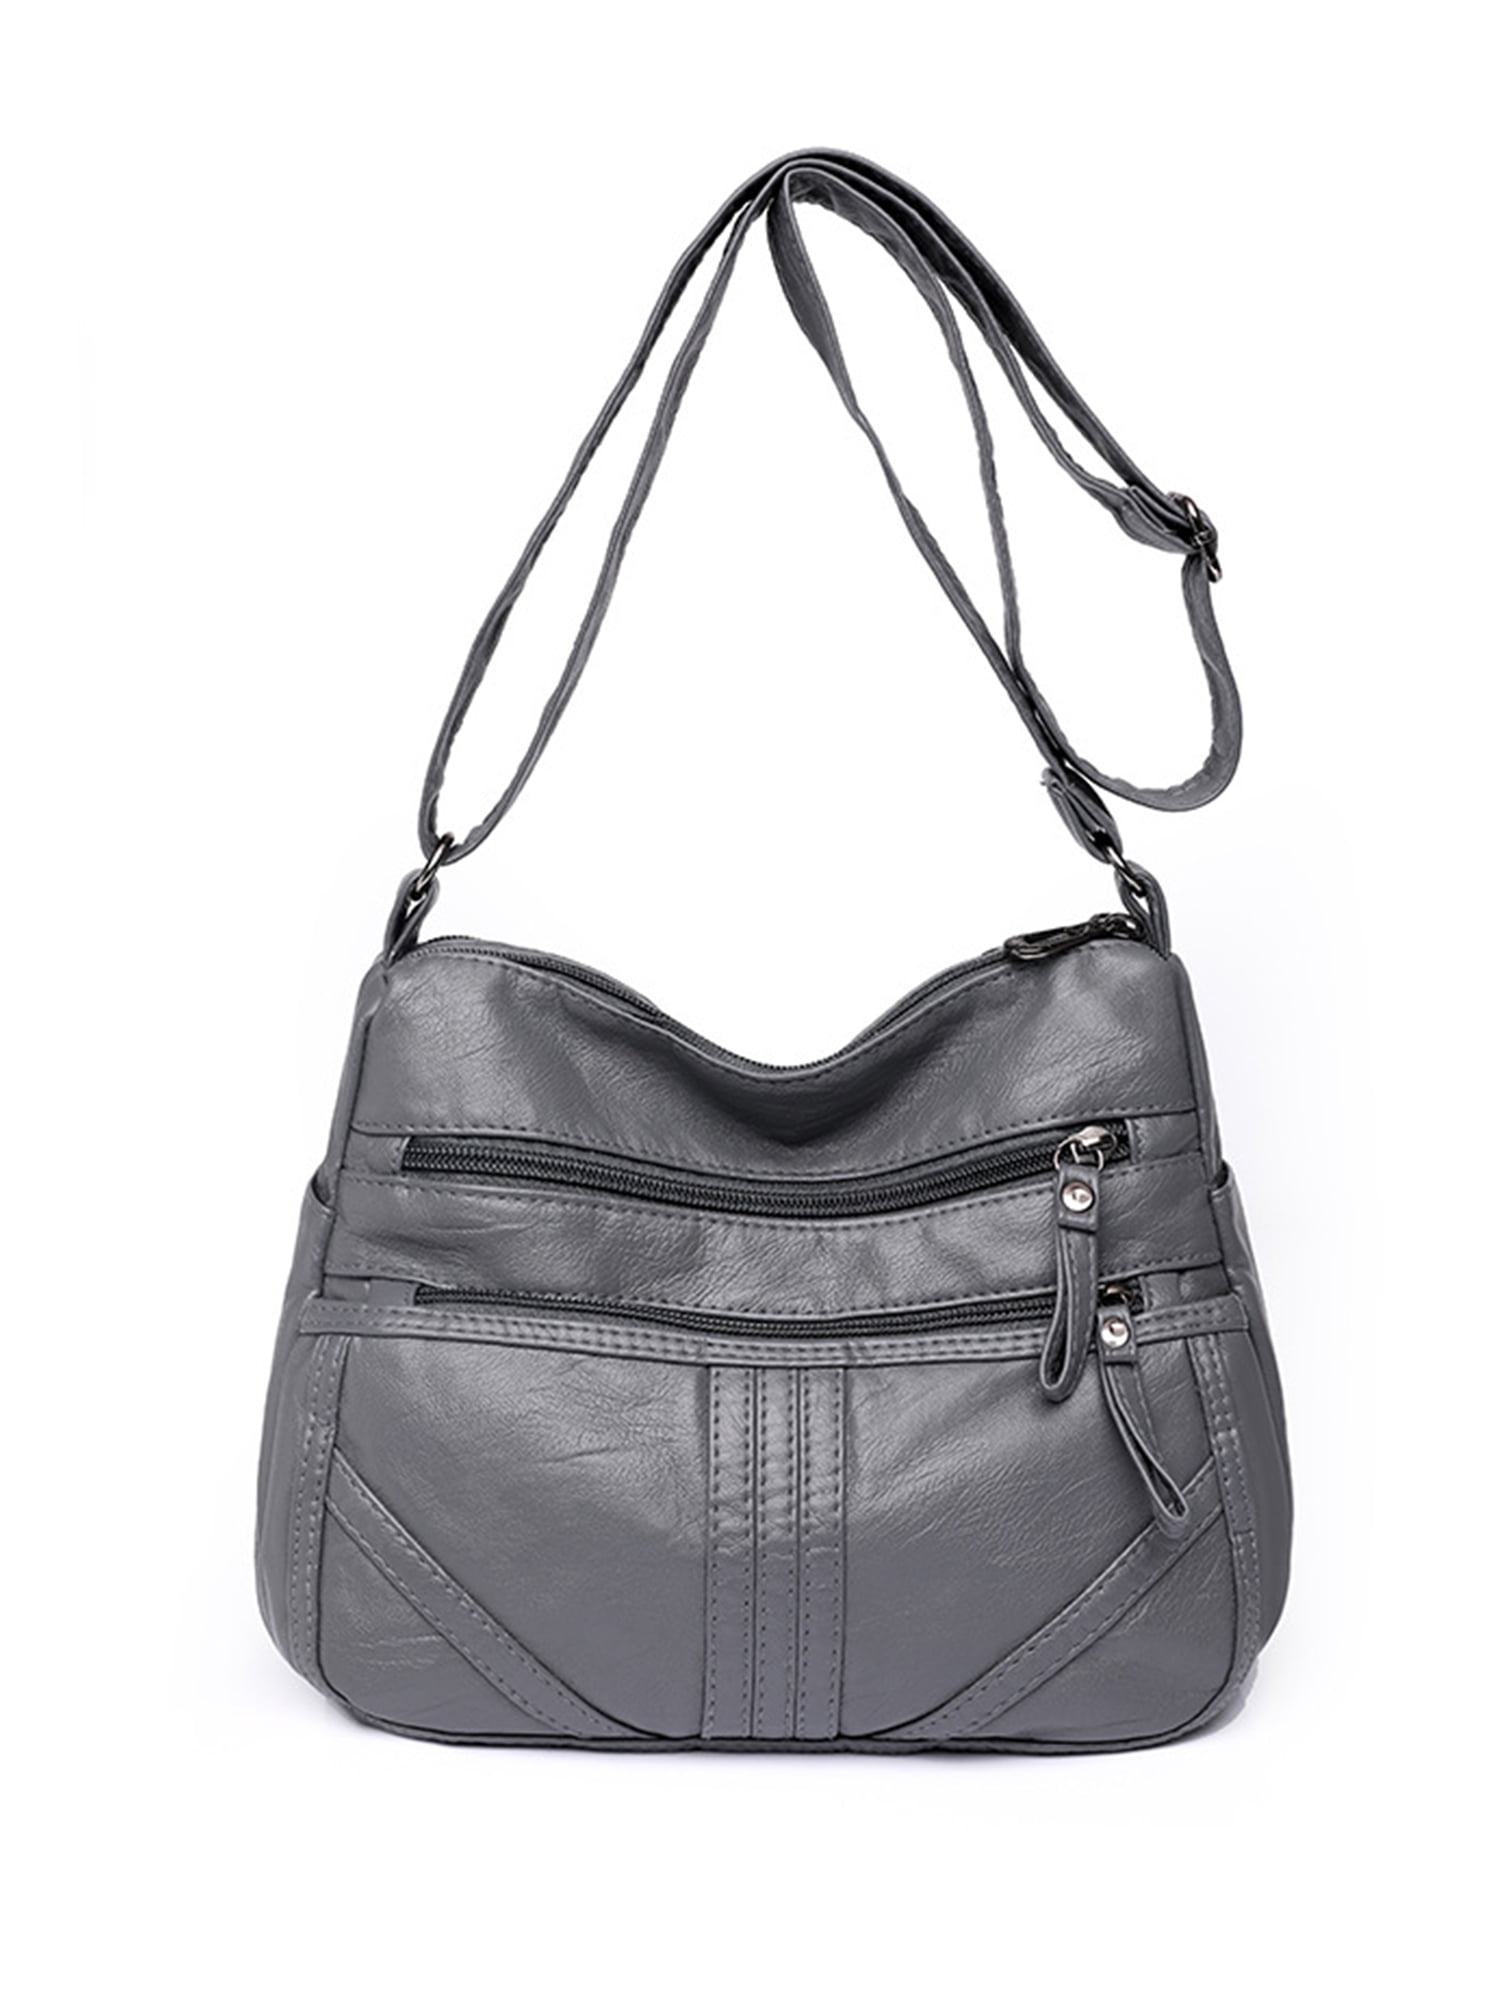 MESSGAIL Crossbody Bags for Women Velvet Shoulder Handbags Ladies Clutch  Purses with Wide Adjustable Strap: Handbags